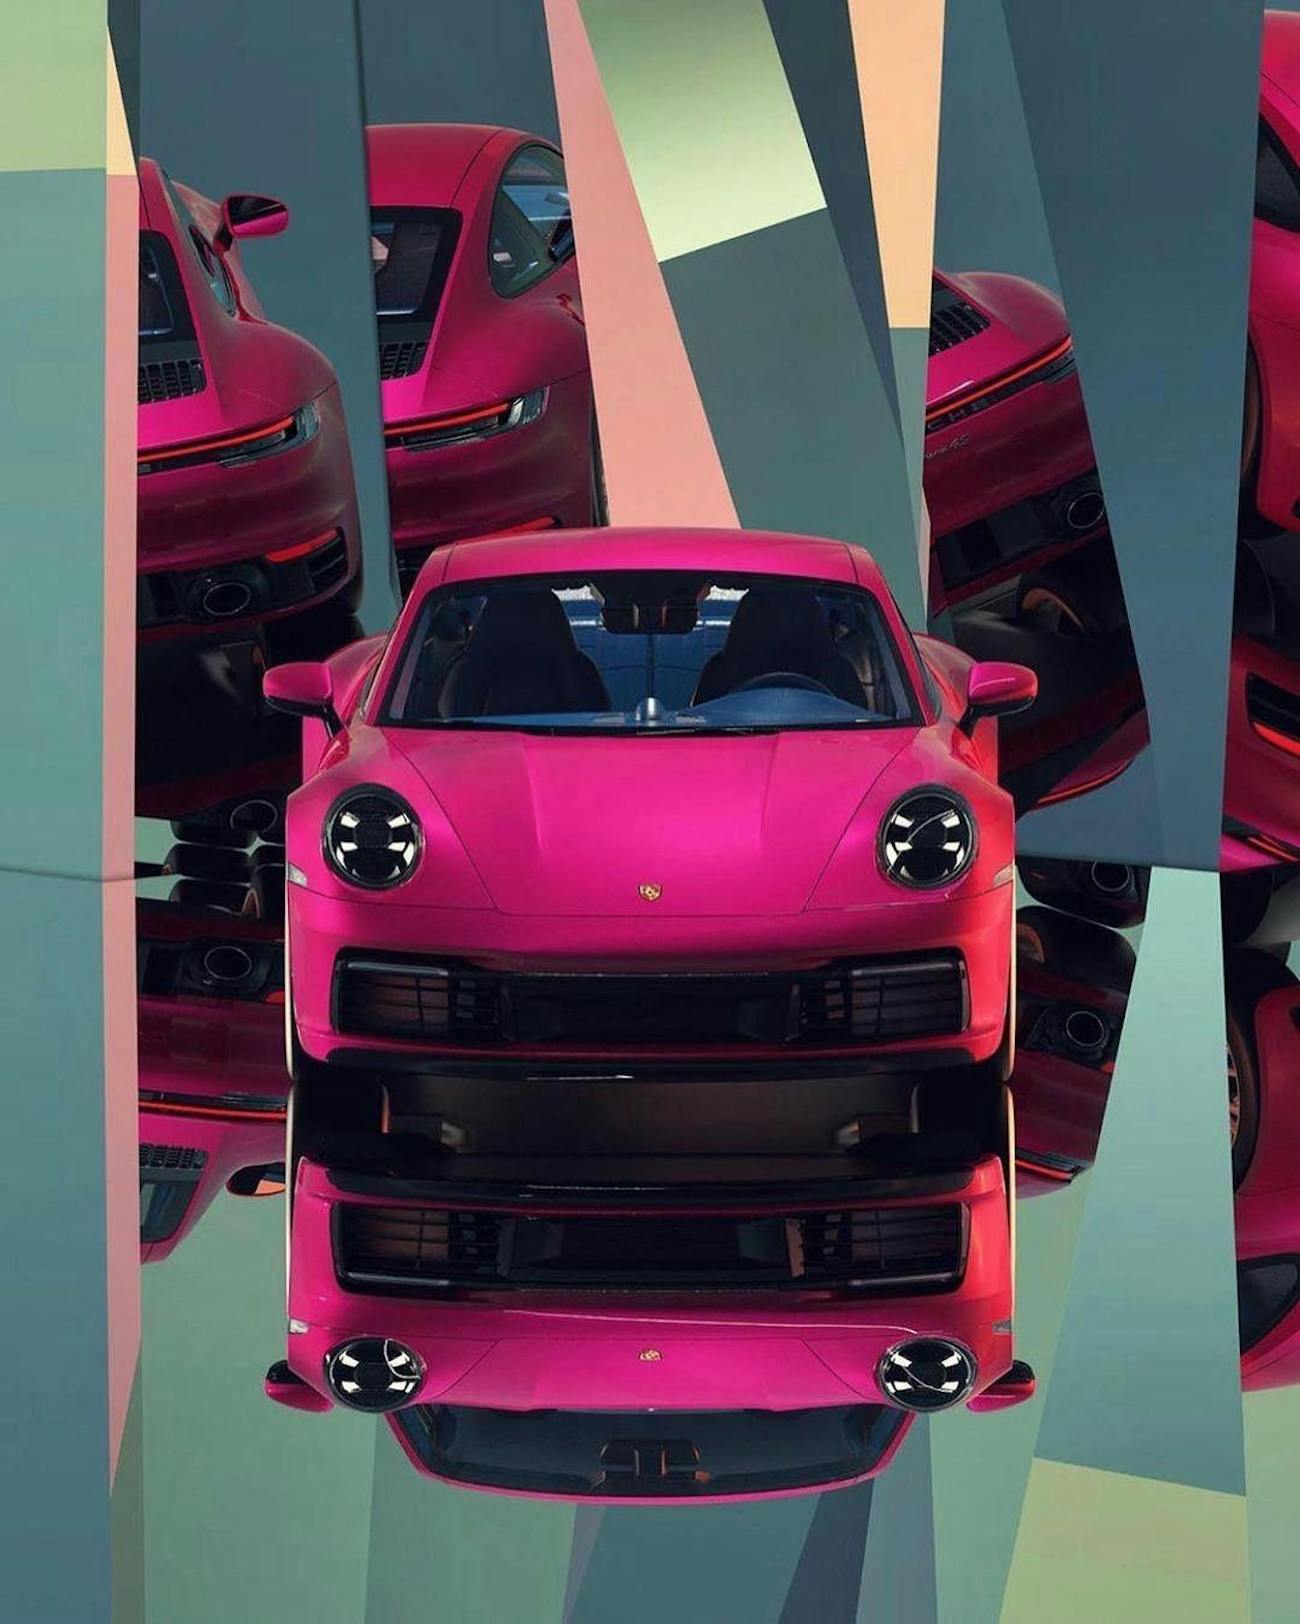 Kaleidoscopic fuchsia pink Porsche reflected in cubist style